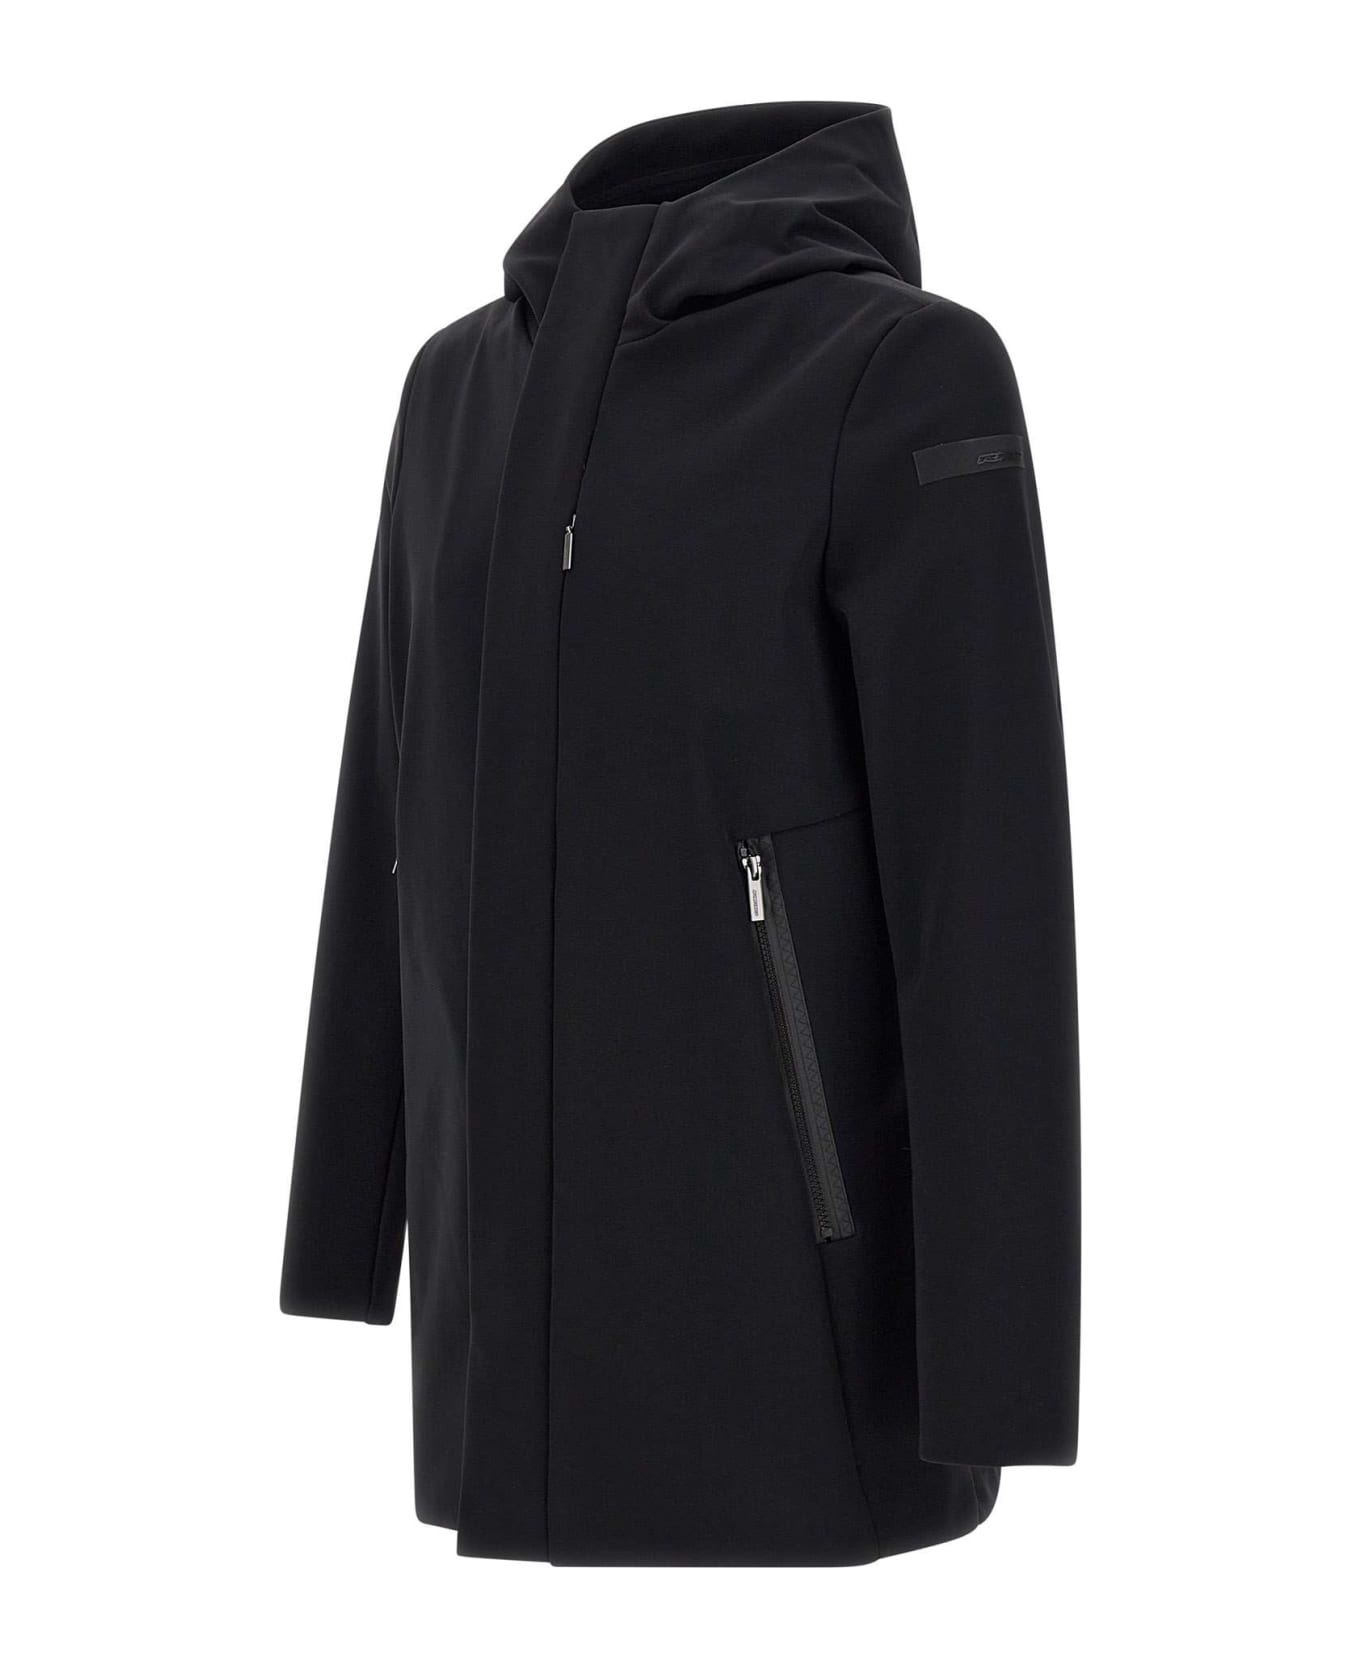 RRD - Roberto Ricci Design 'winter Thermo' Jacket Jacket - NERO